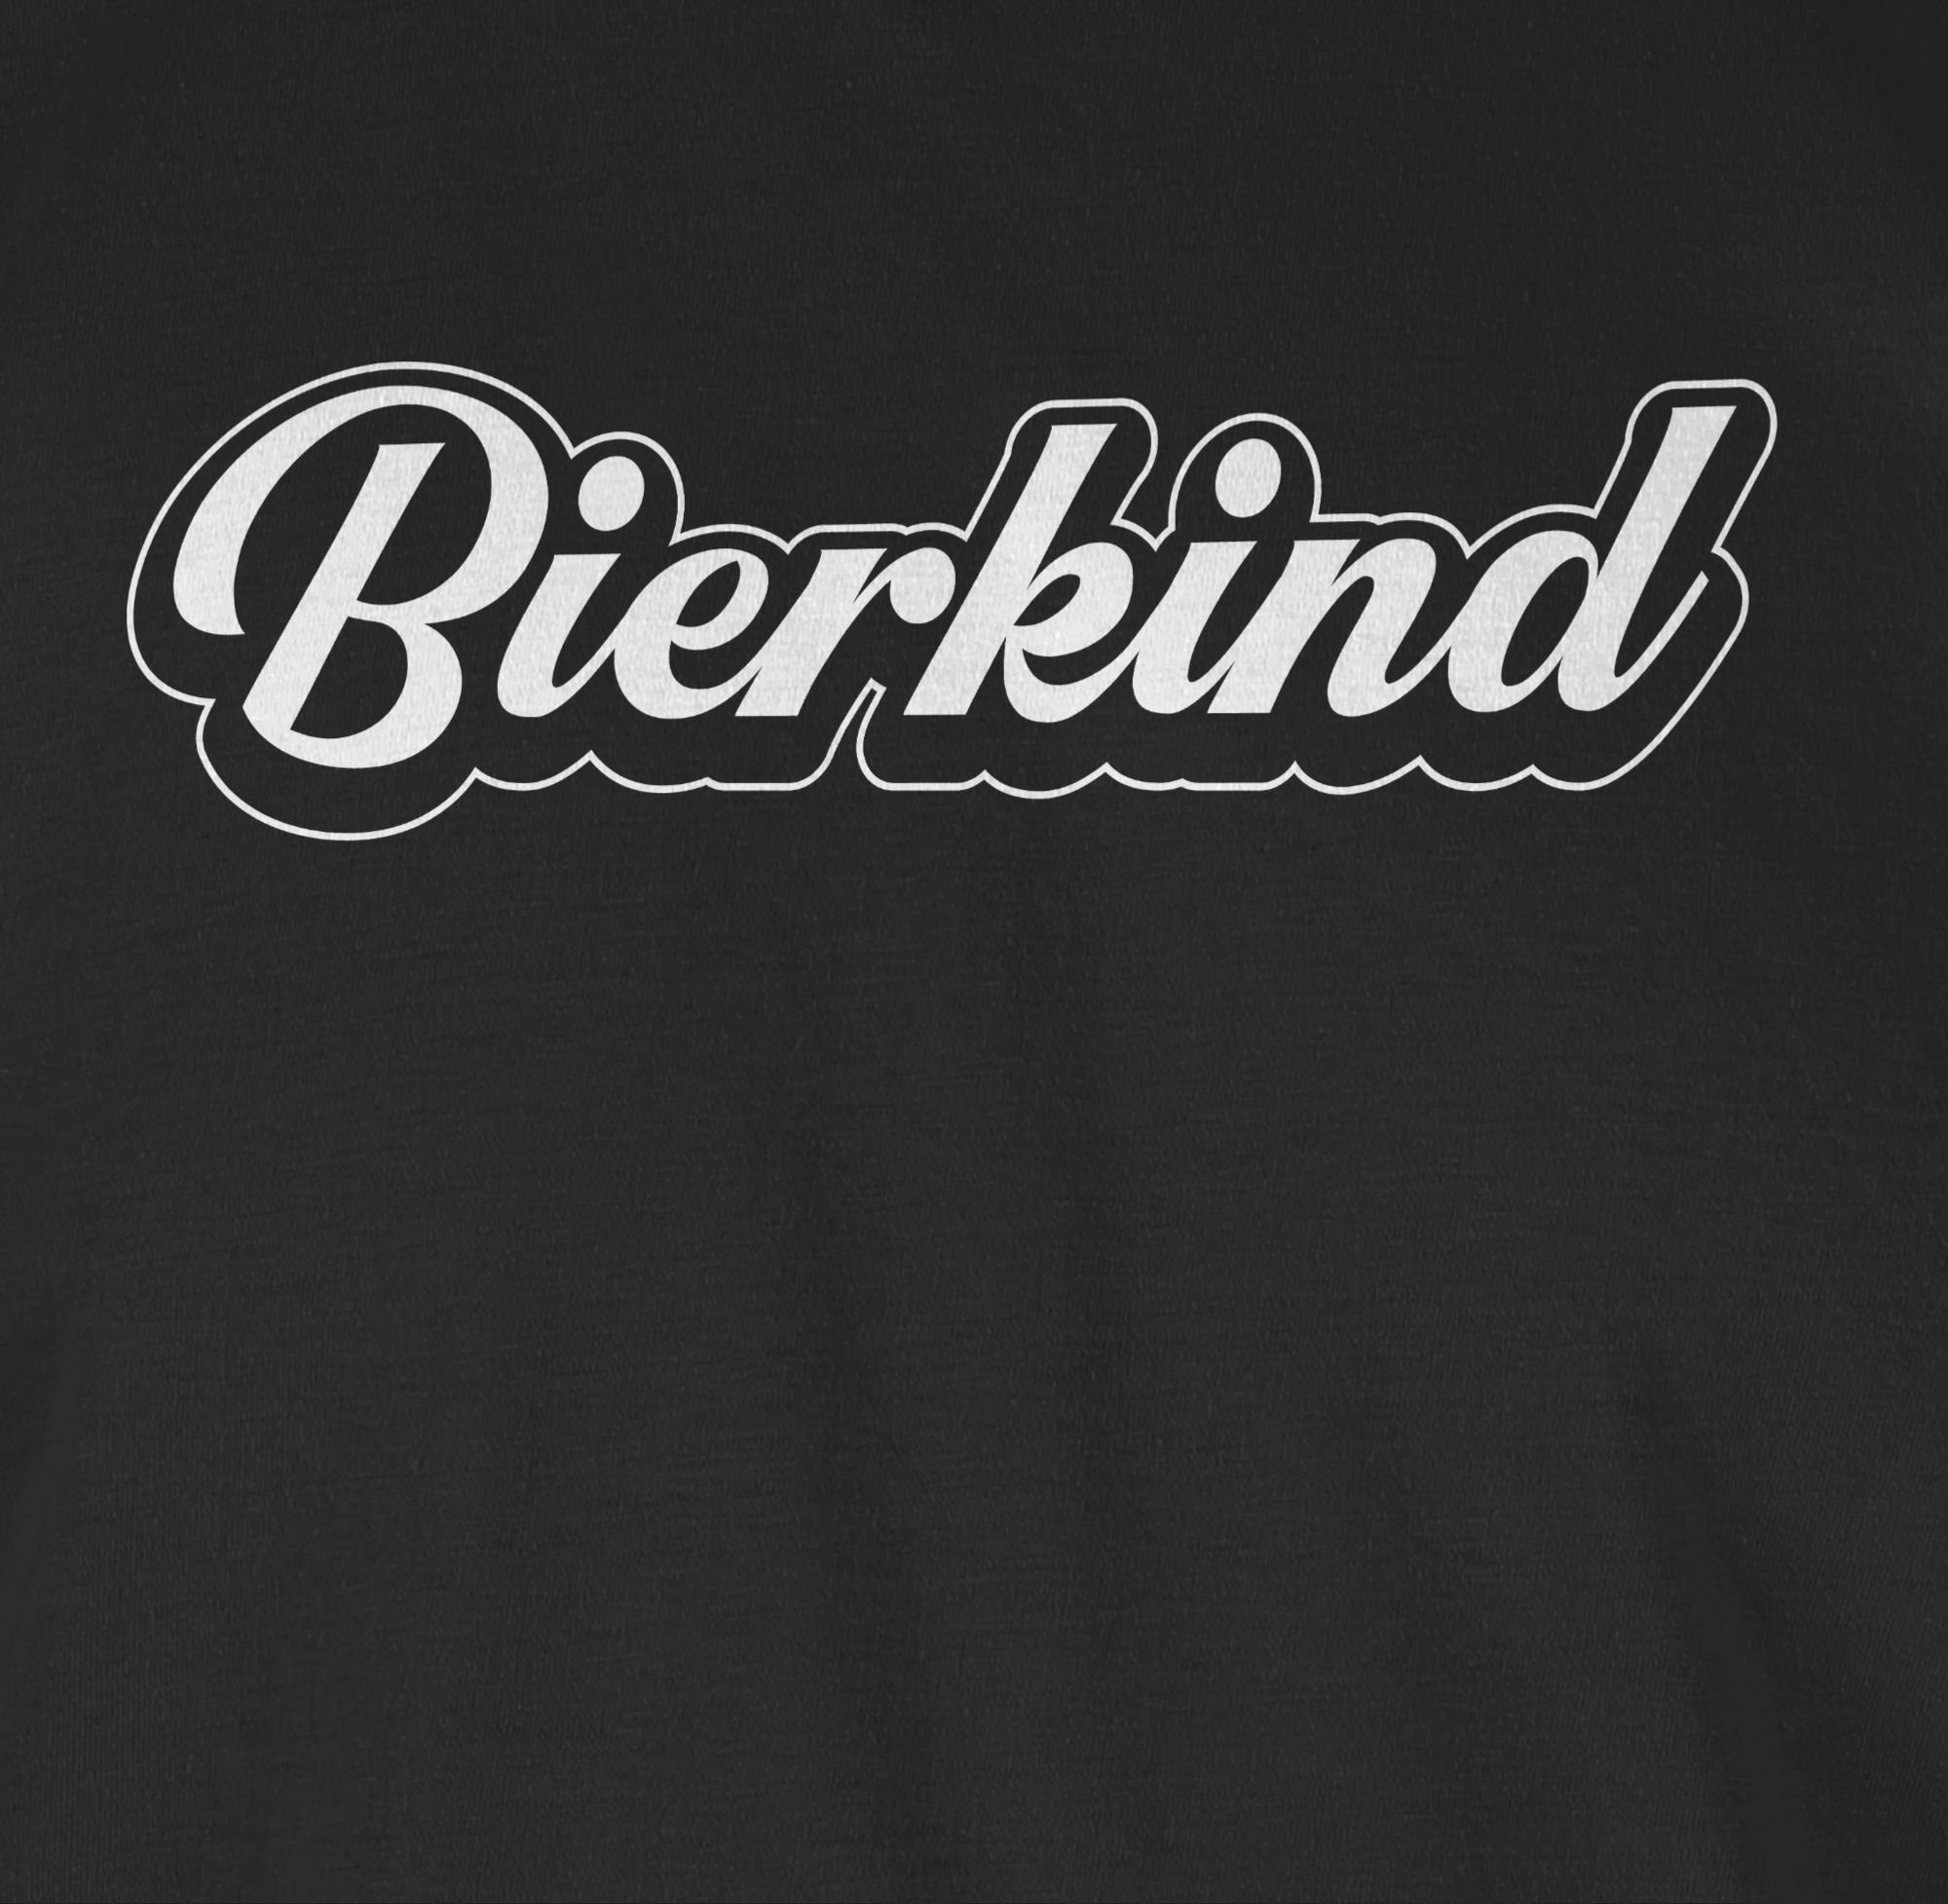 Shirtracer T-Shirt Bierkind Party & Herren 01 Alkohol Schwarz